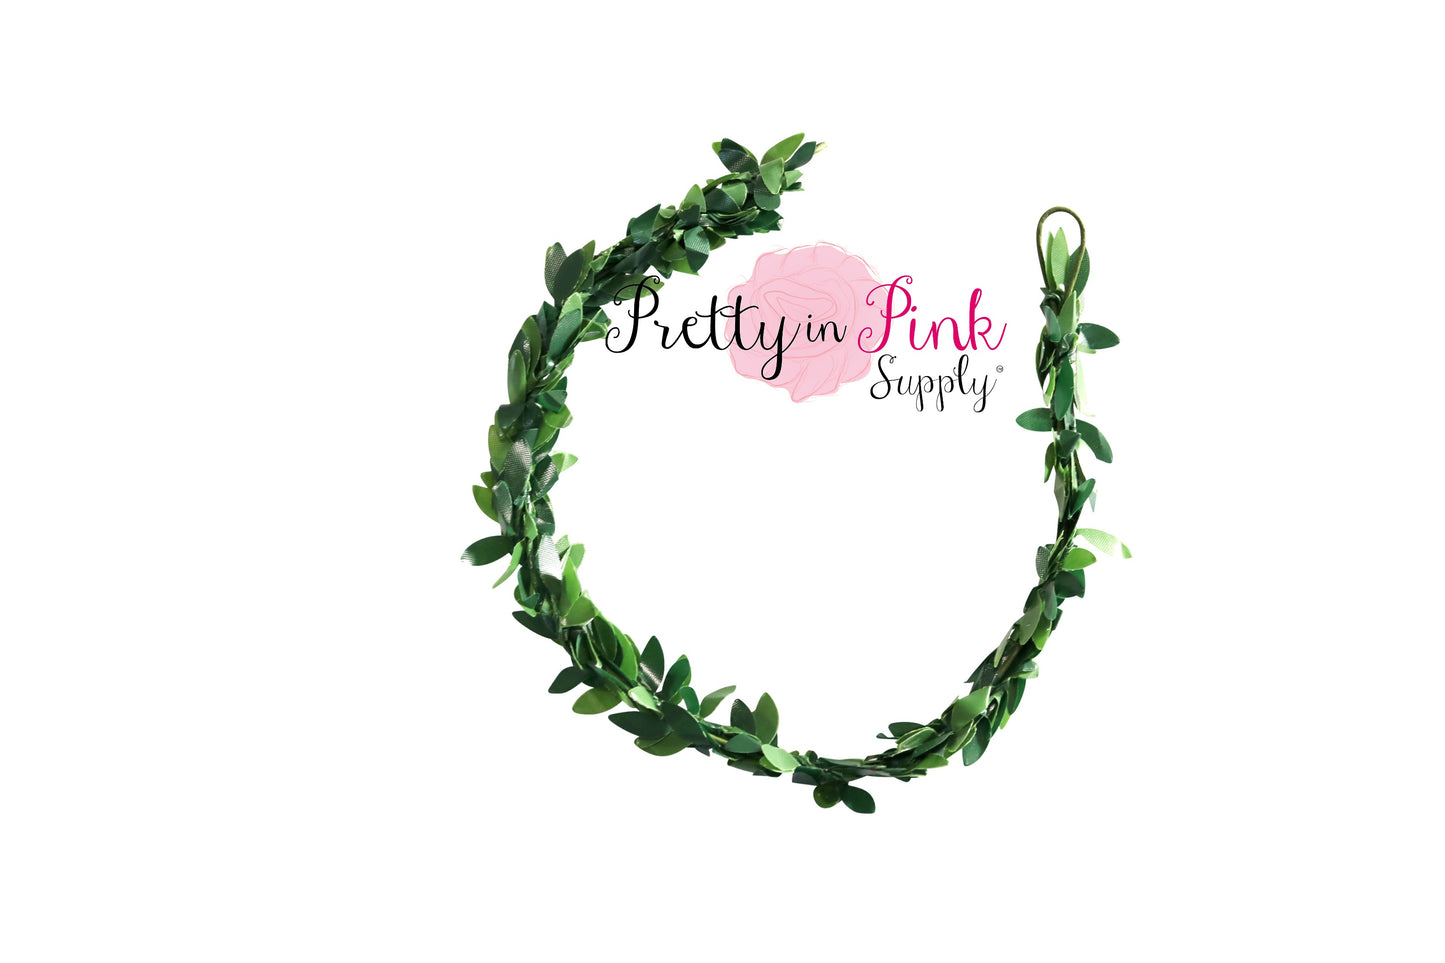 Green Leaf Crown Wreath - Pretty in Pink Supply